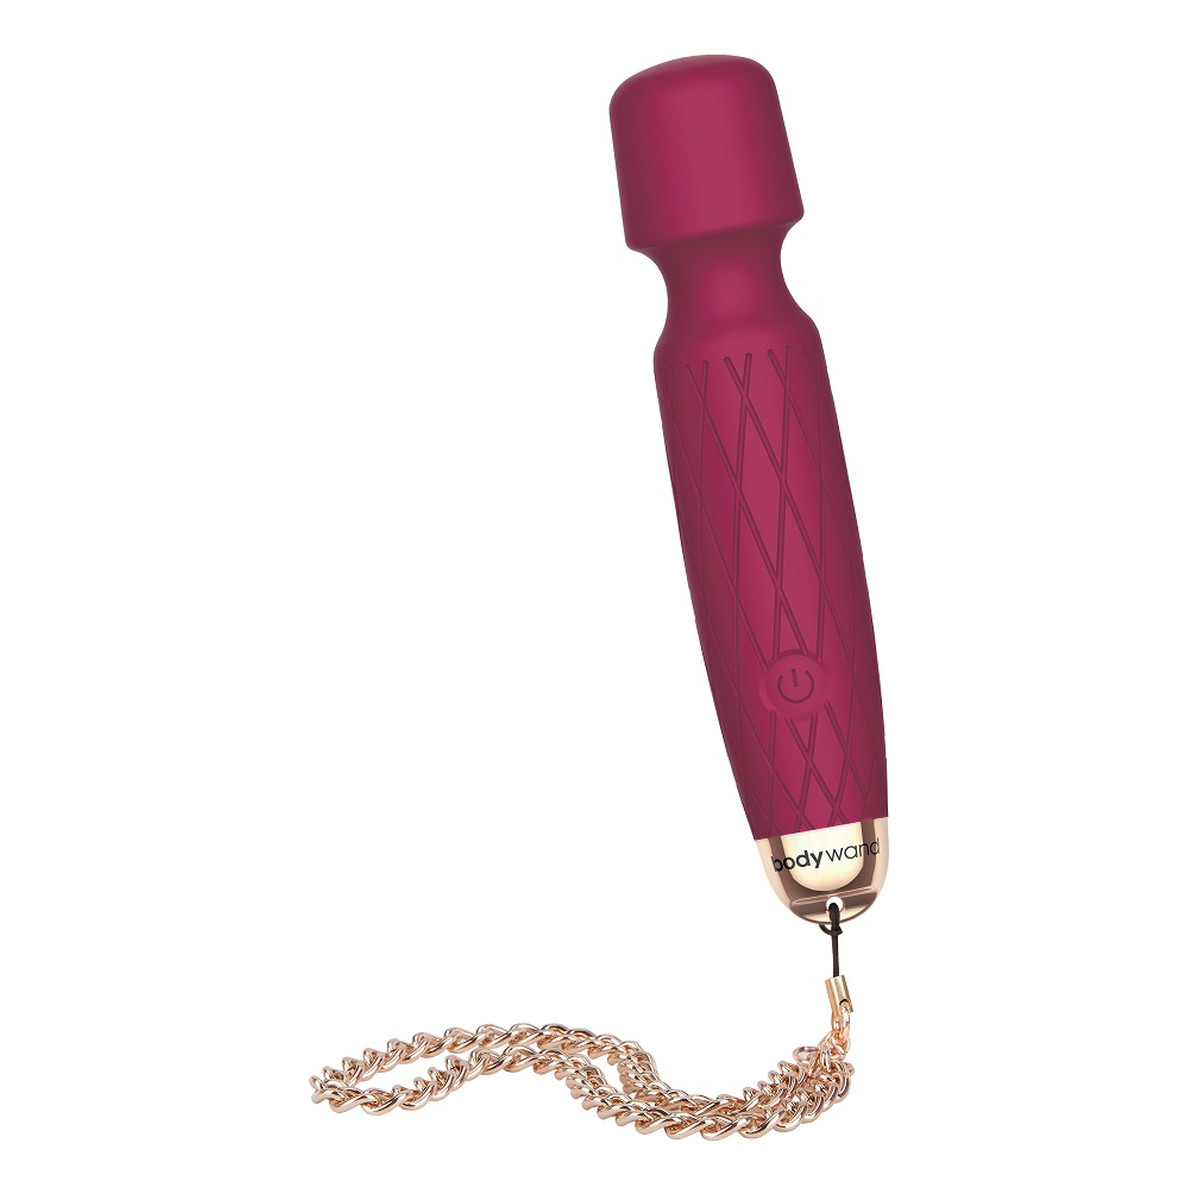 Bodywand Luxe mini usb wand vibrator mini masażer typu wand pink